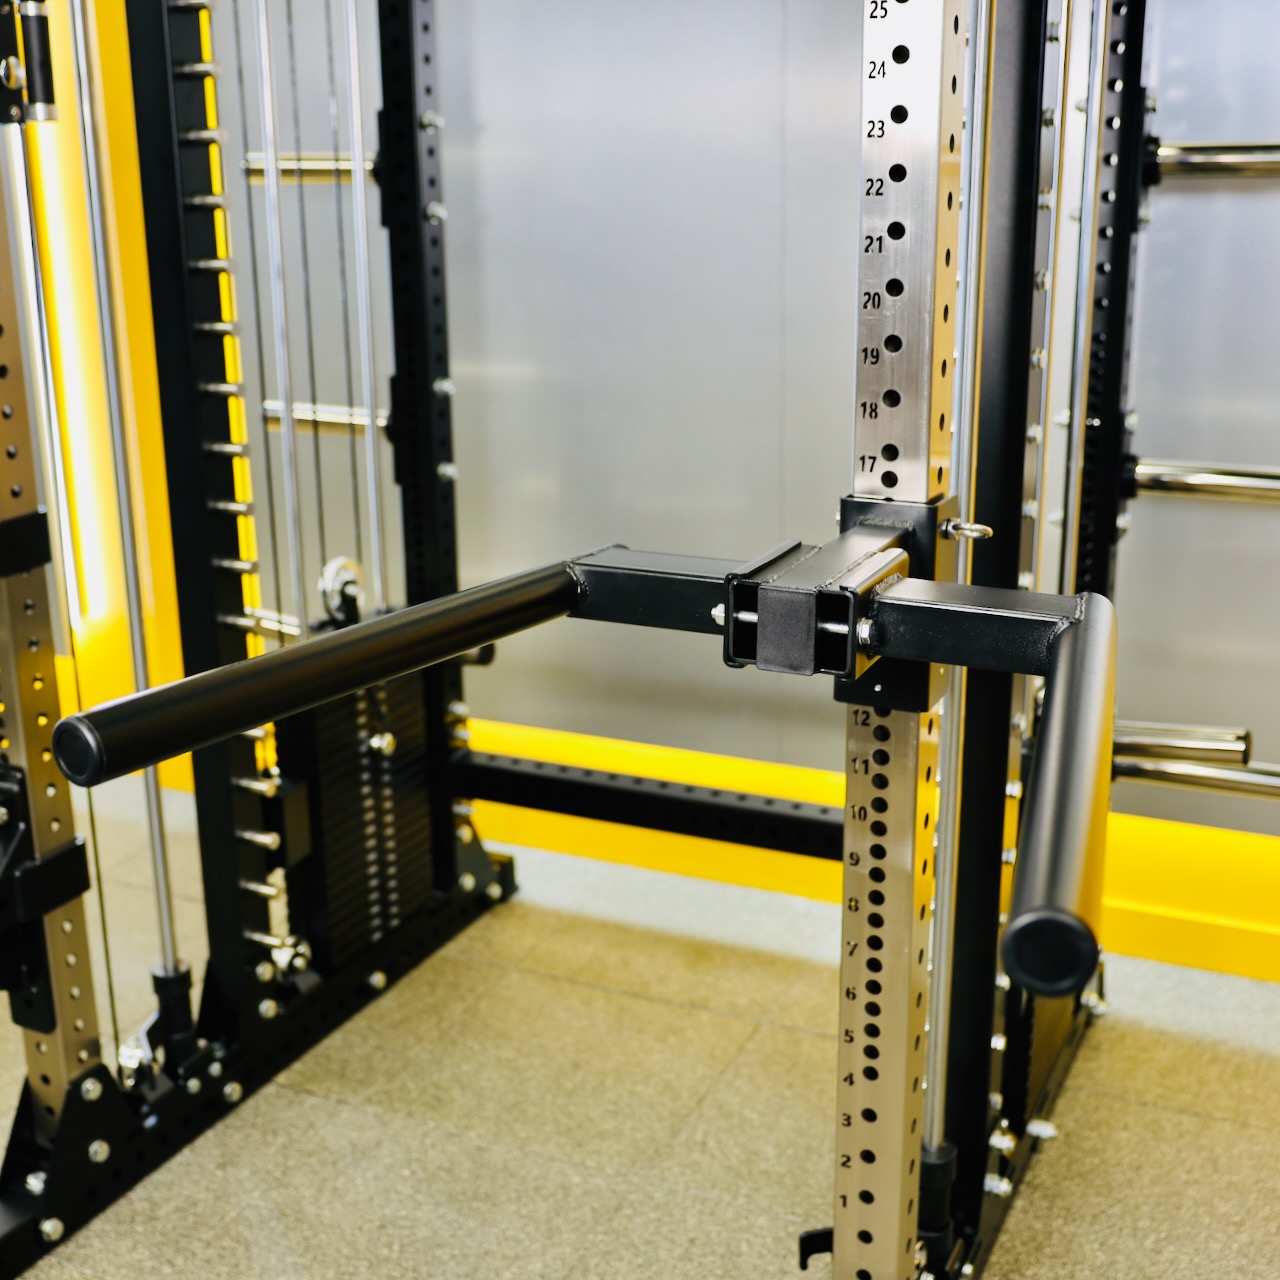 MAXUM SX2 Smith Machine Functional Trainer Squat Rack Home Gym – 5